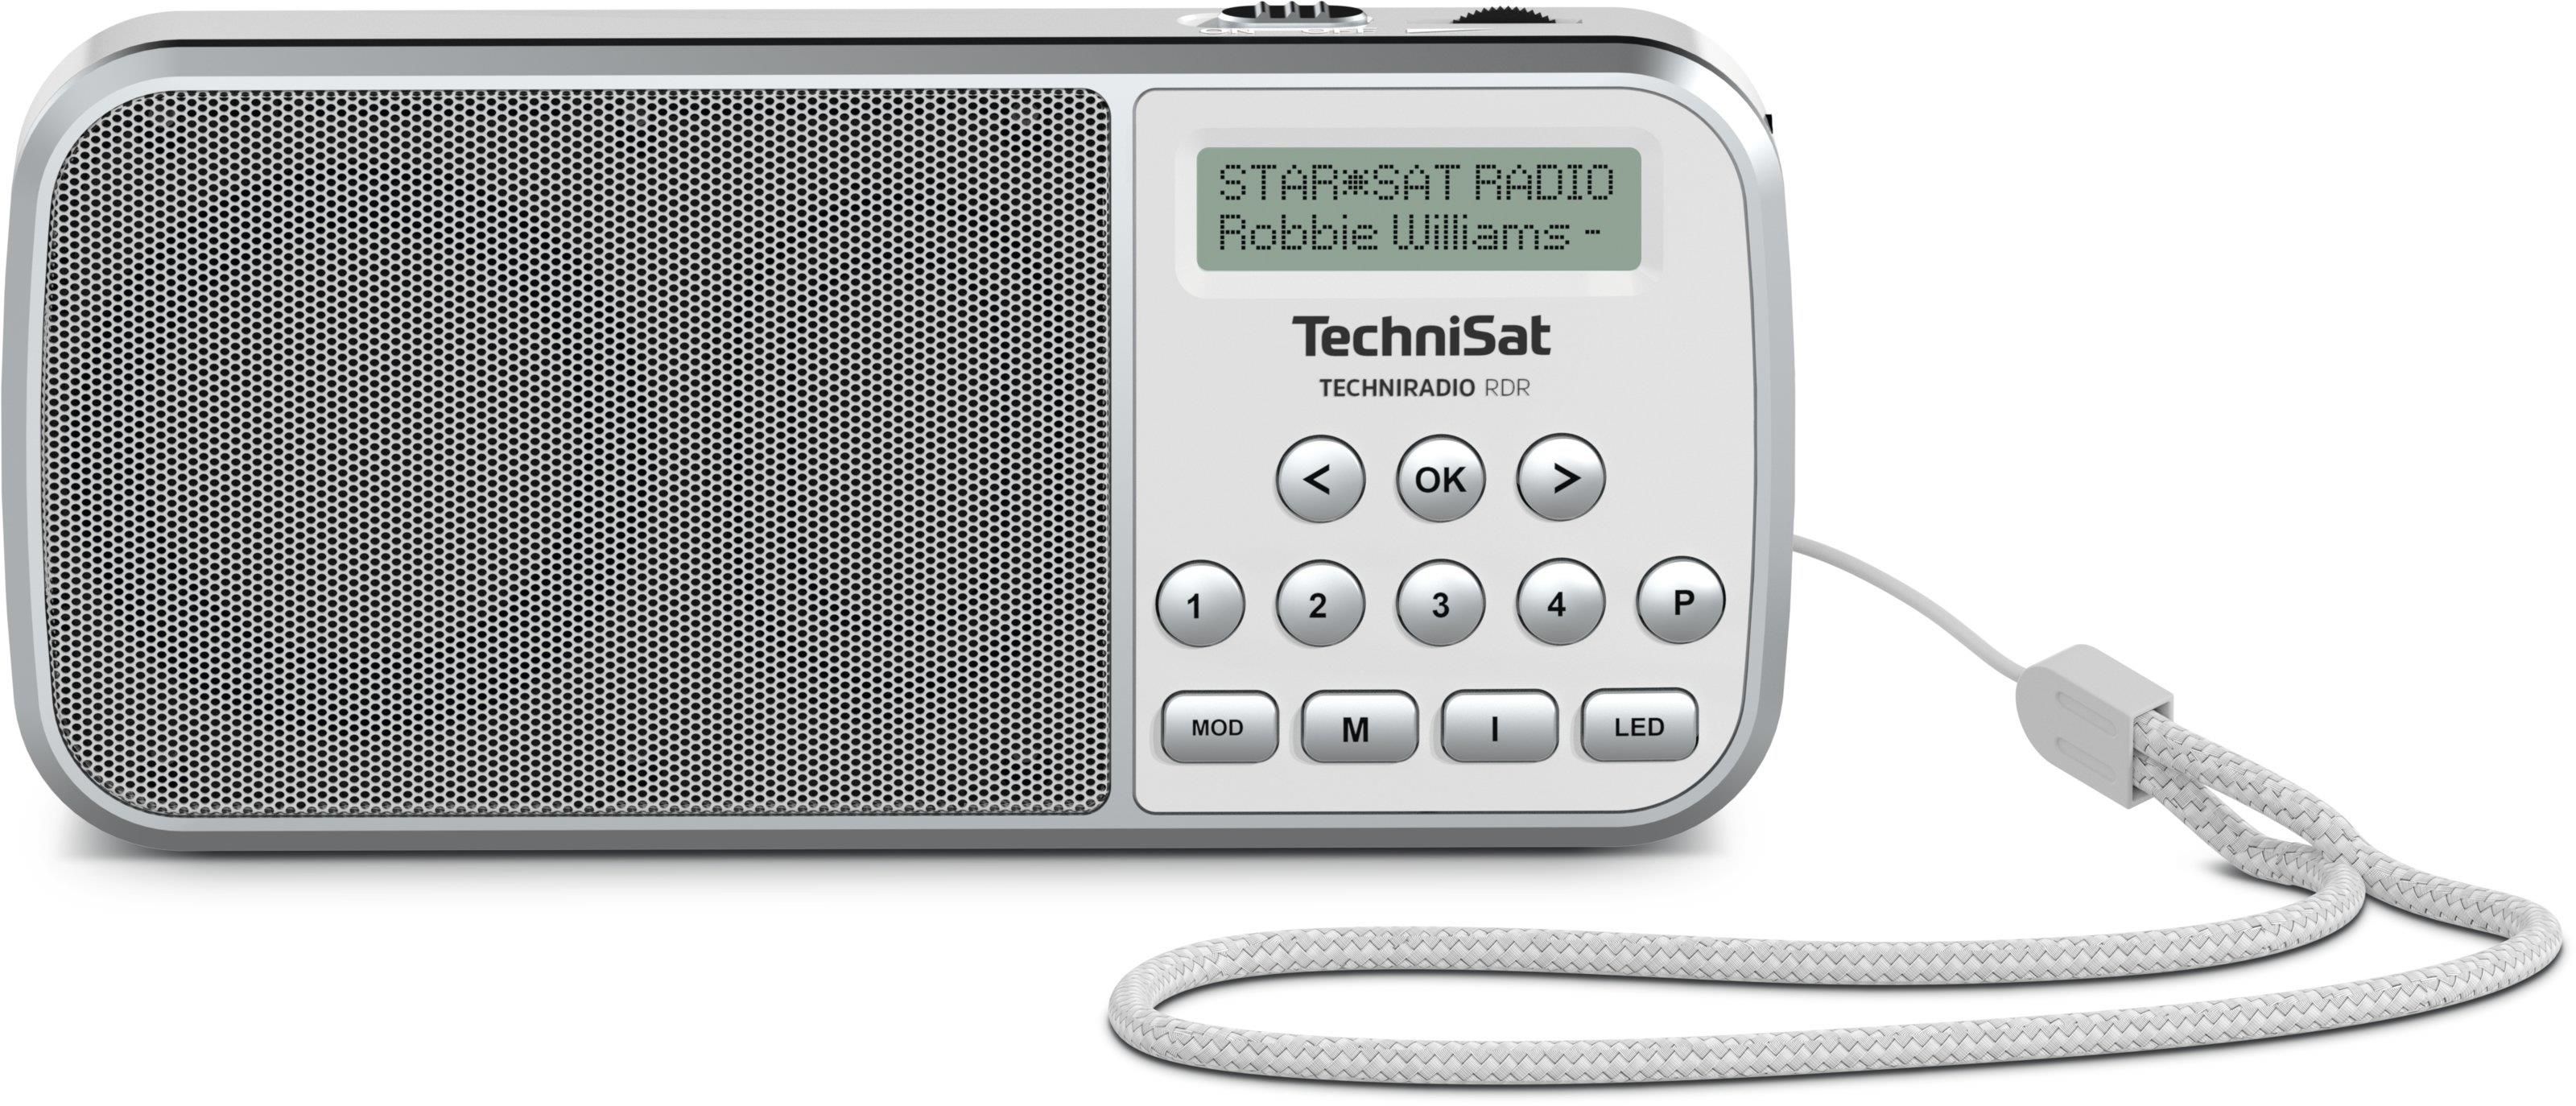 TechniSat TechniRadio RDR Radio